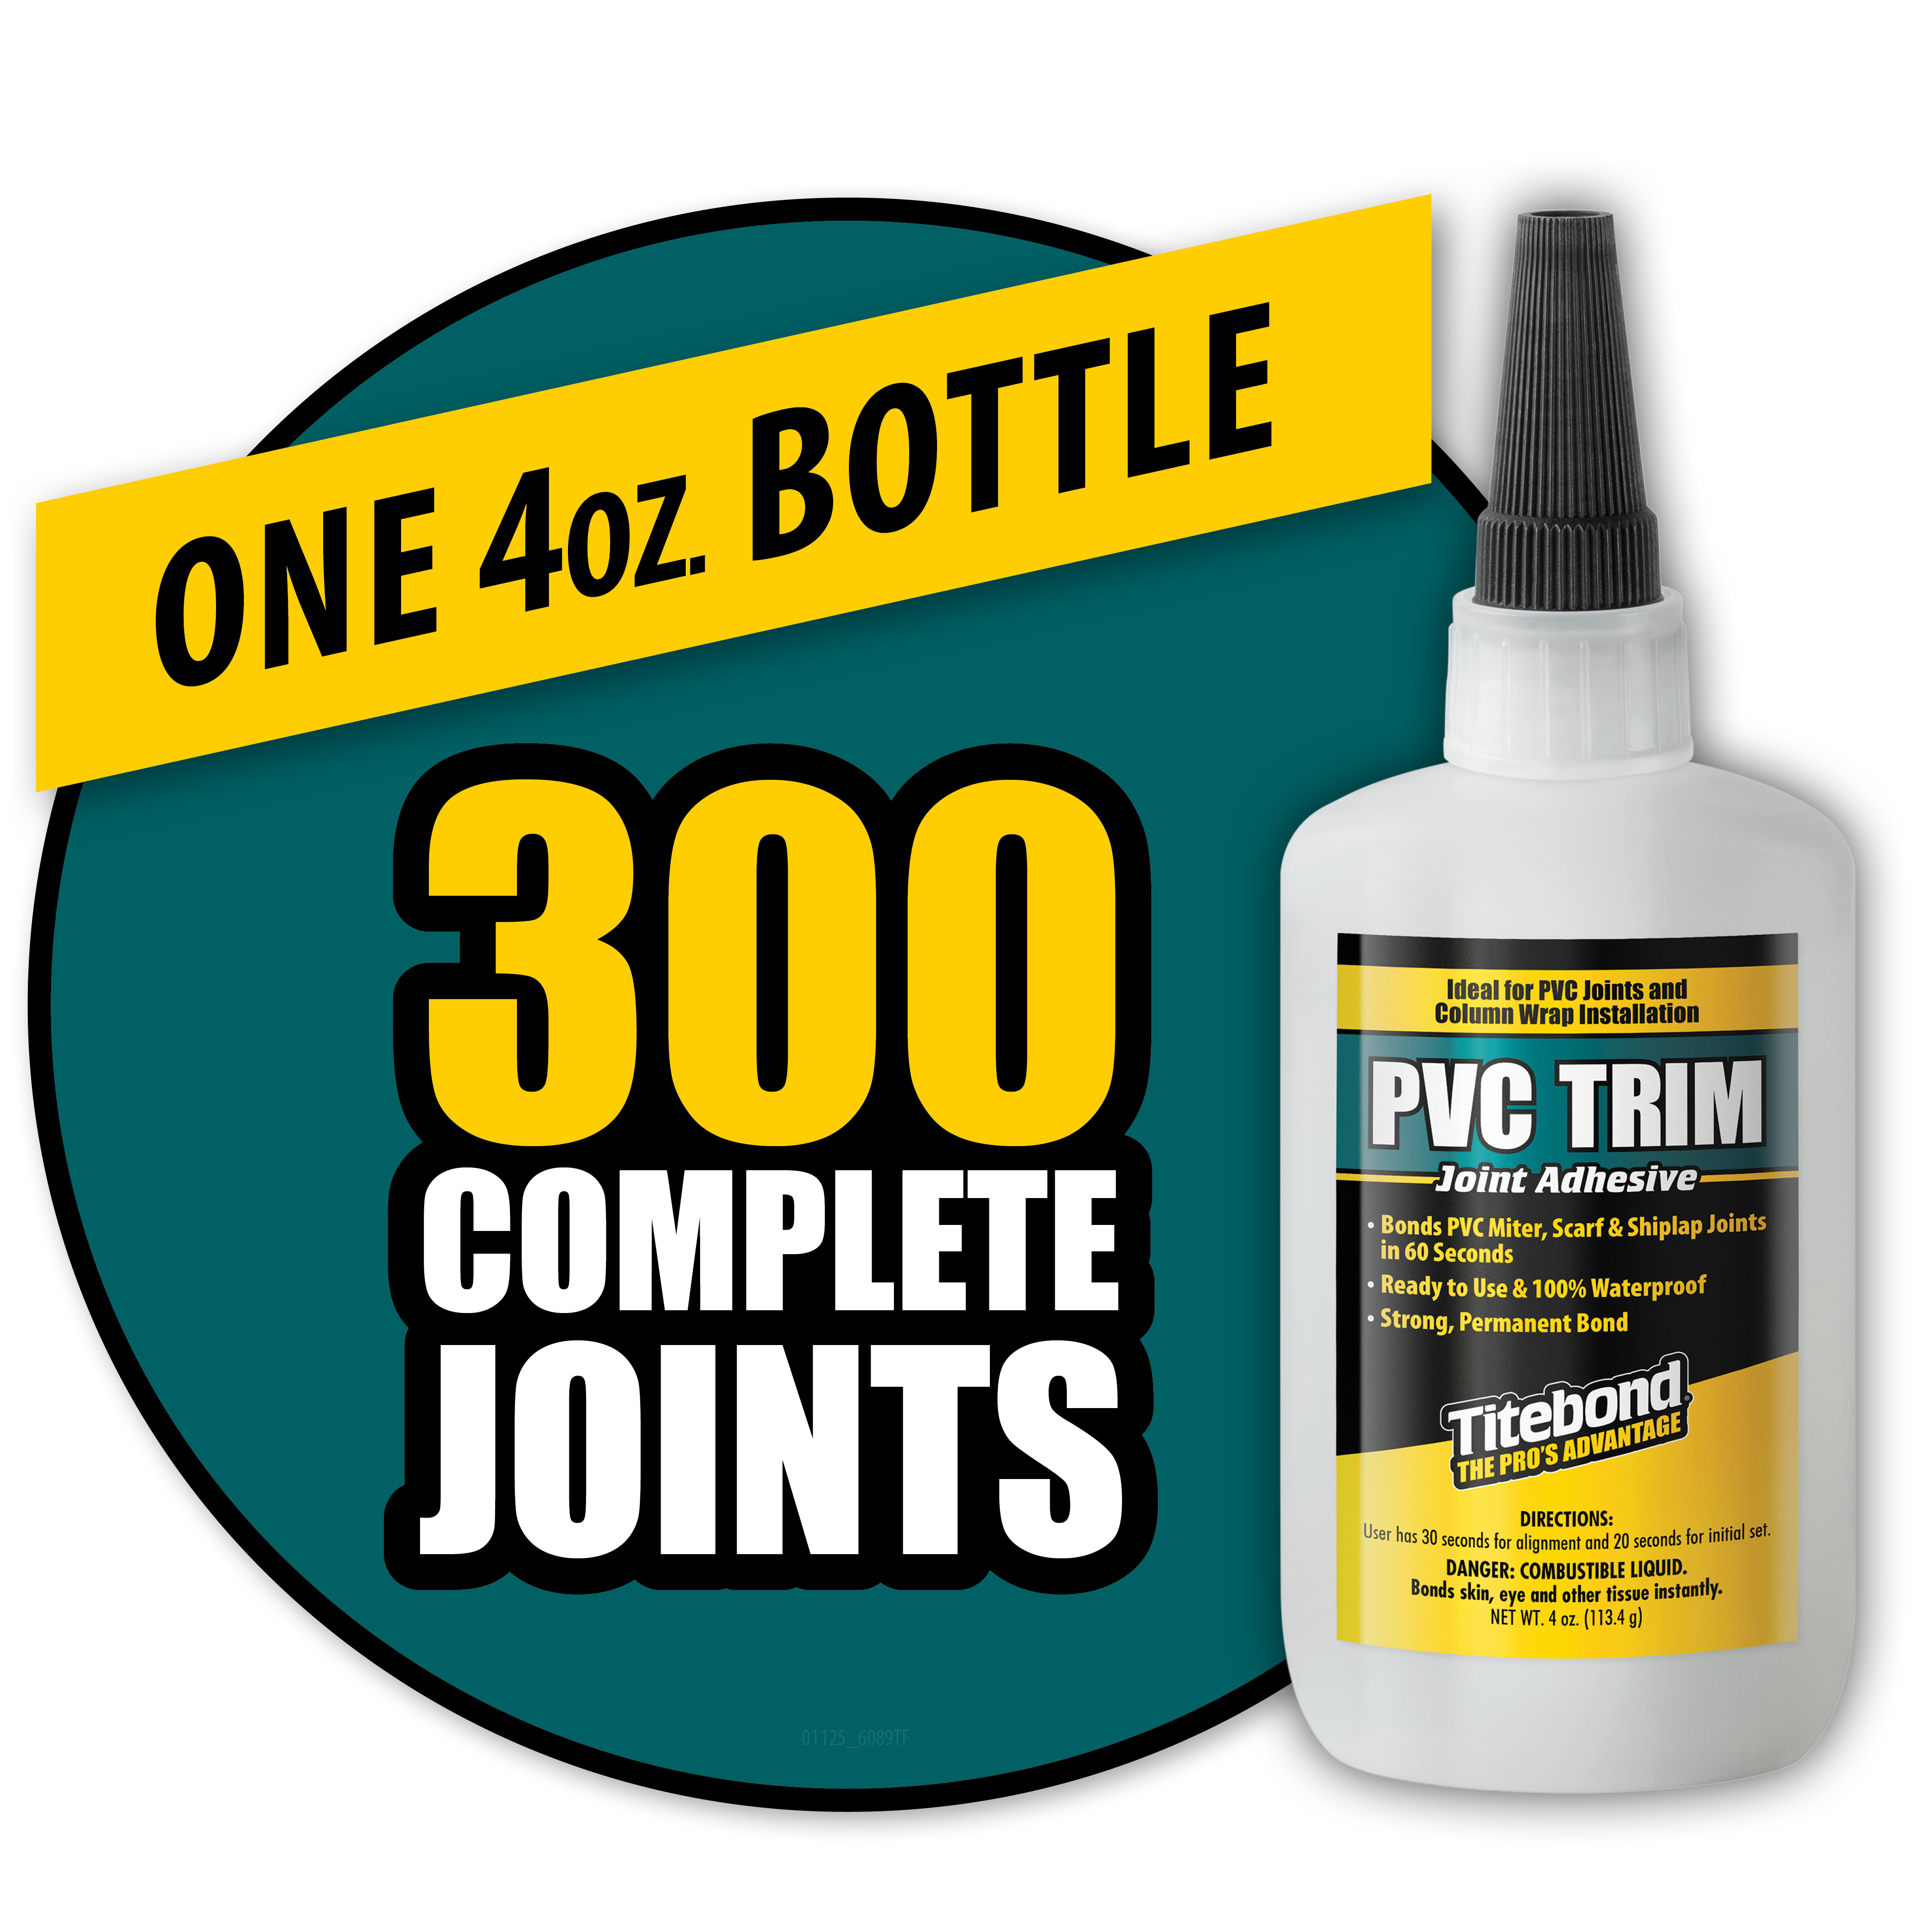 Titebond PVC Trim Joint Adhesive